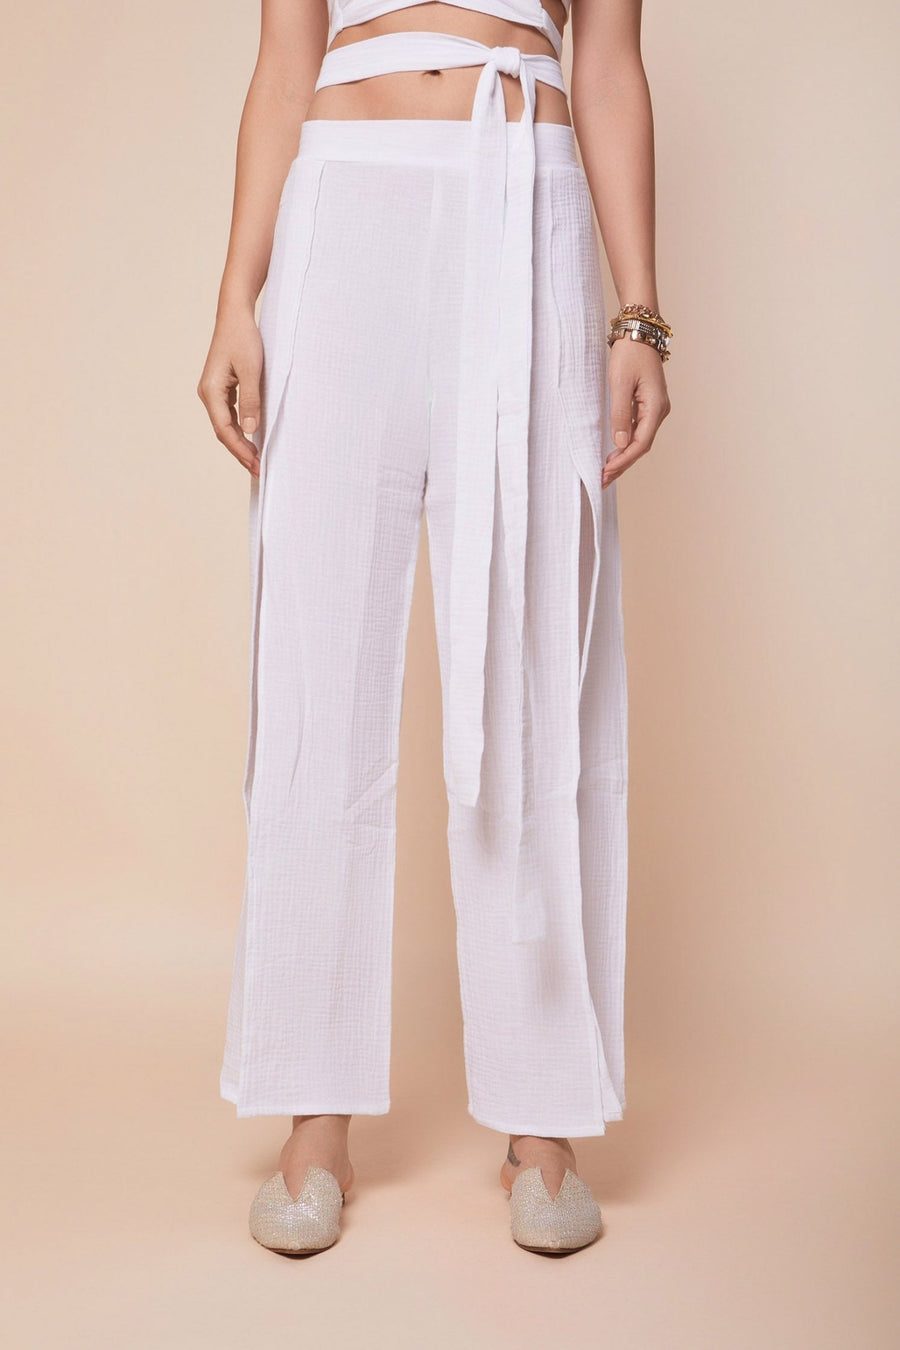 White cotton 2 slits pants - nahlaelalfydesigns